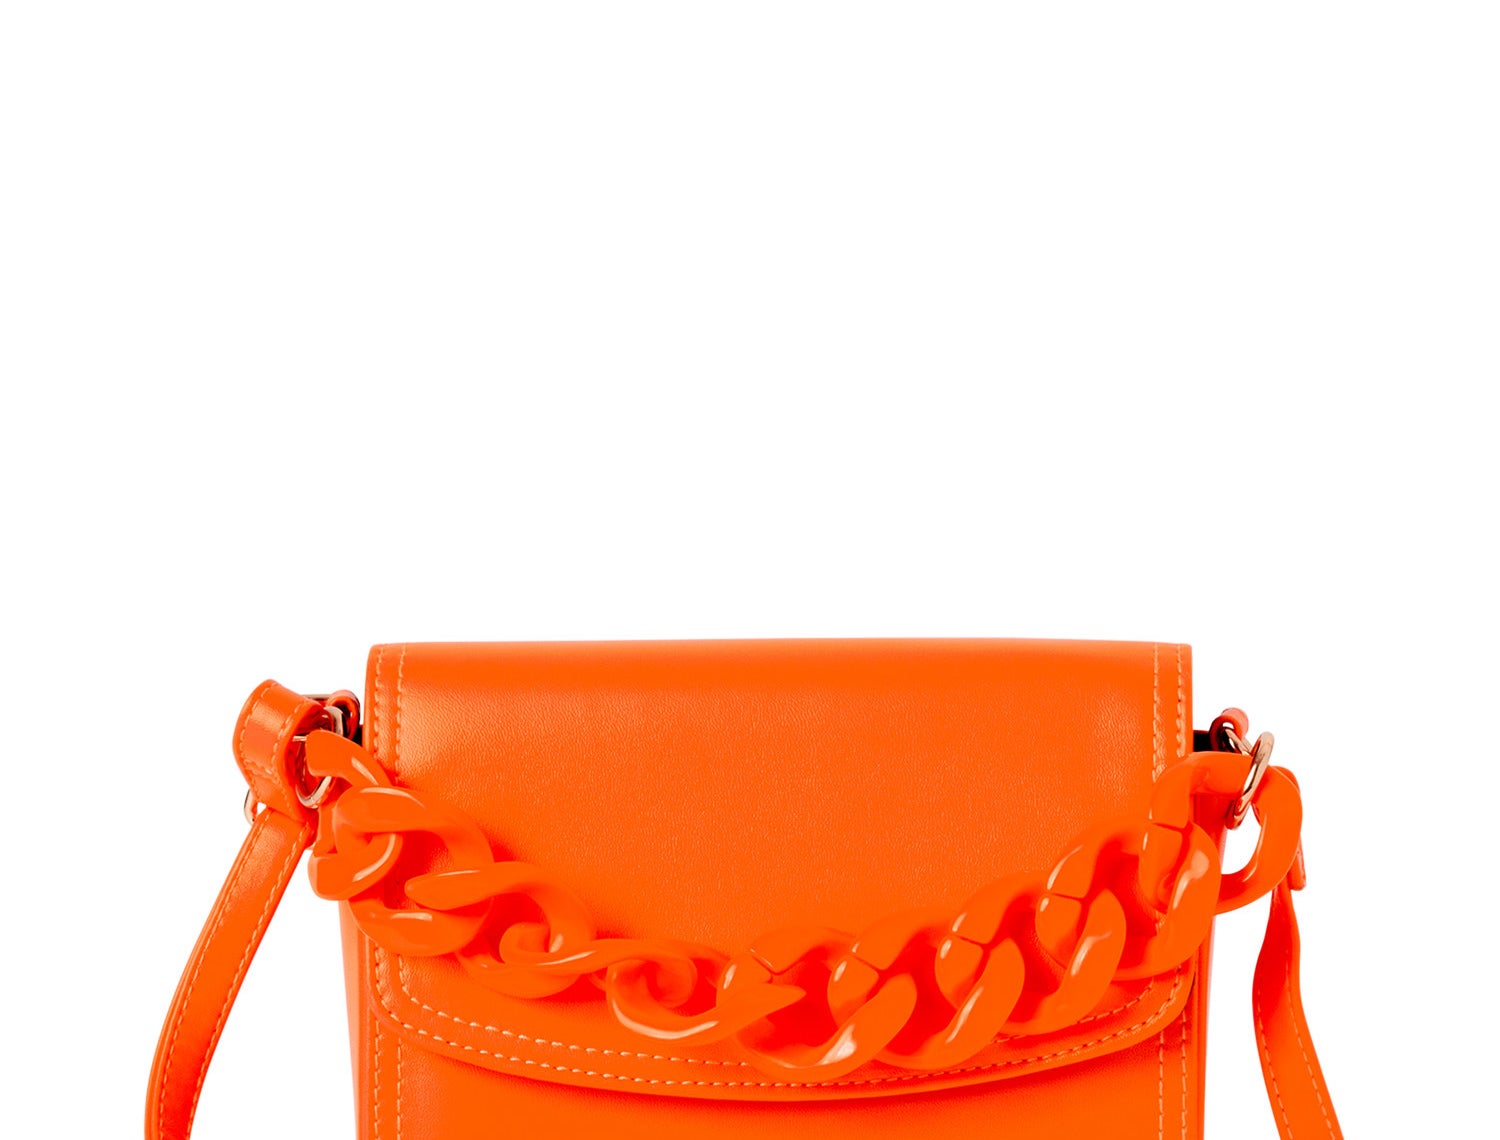 The orange crossbody bag